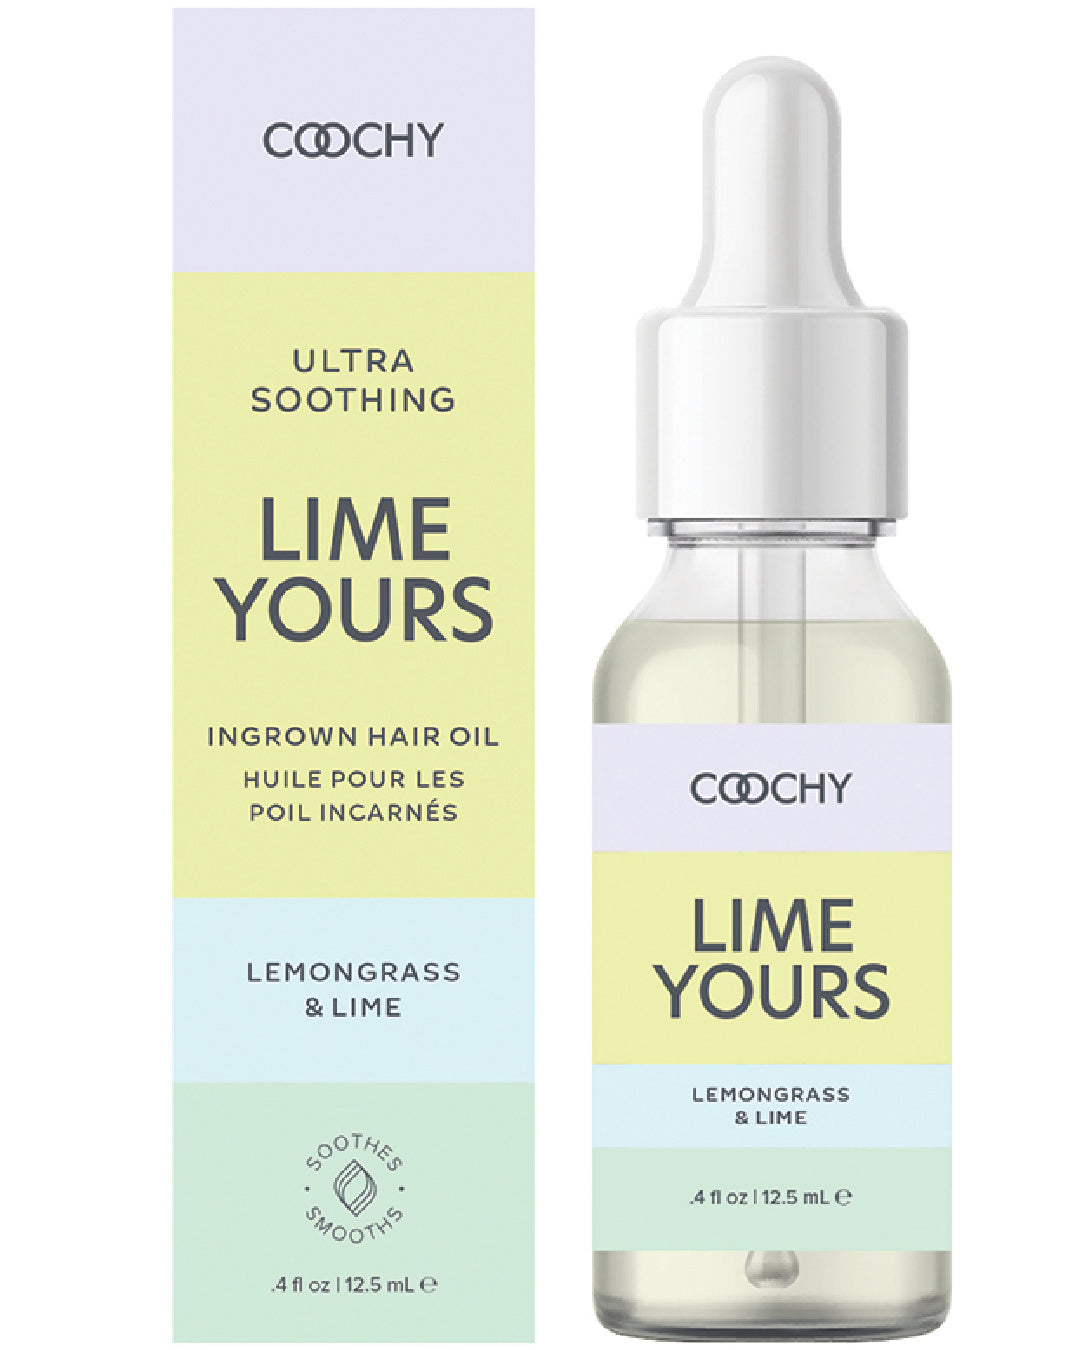 Coochy Ultra Soothing Ingrown Hair Oil-Lemongrass Lime bottle and box 